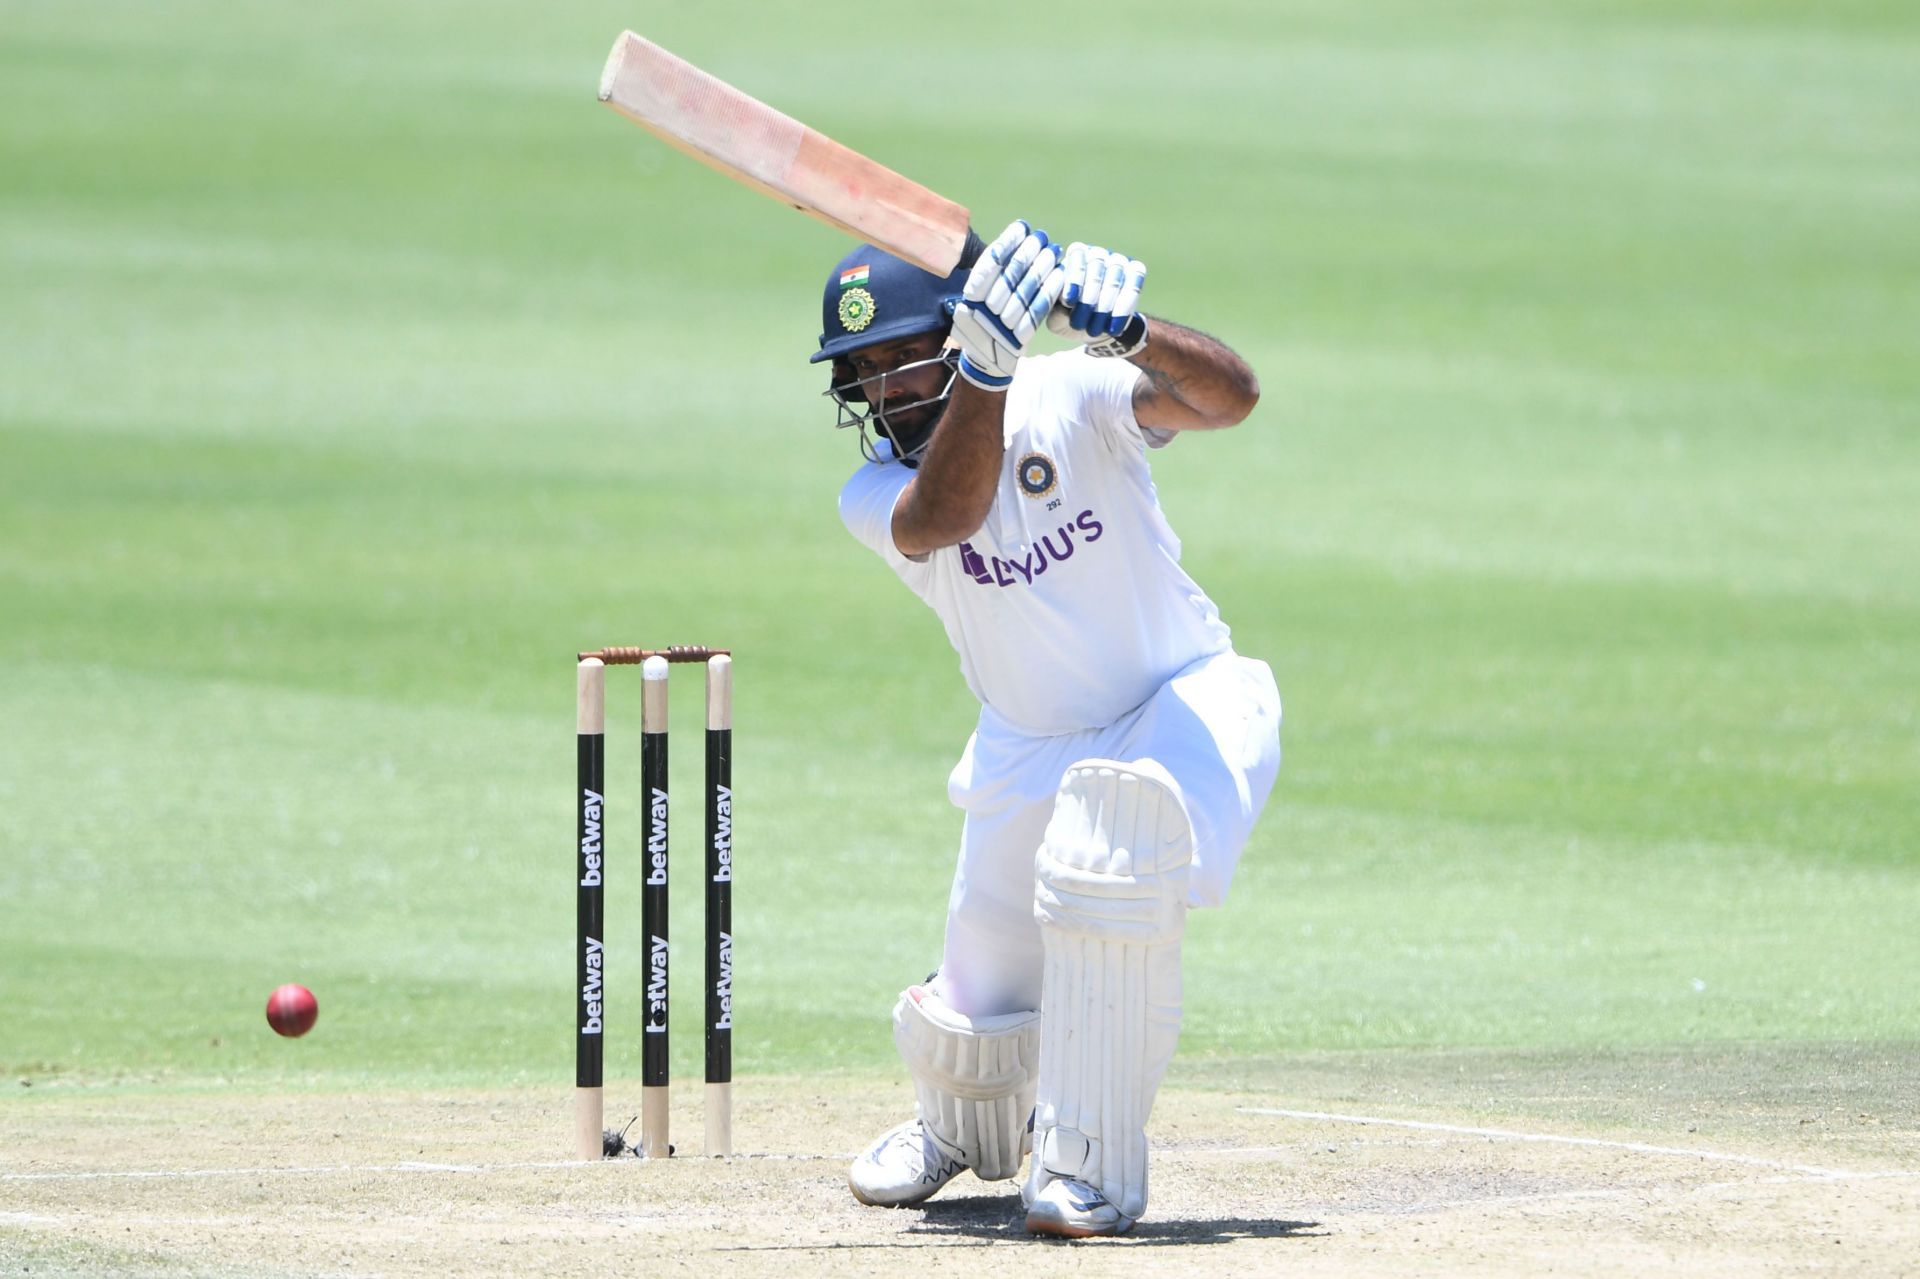 Hanuma Vihari played a fighting knock on Day 3 of the Johannesburg Test